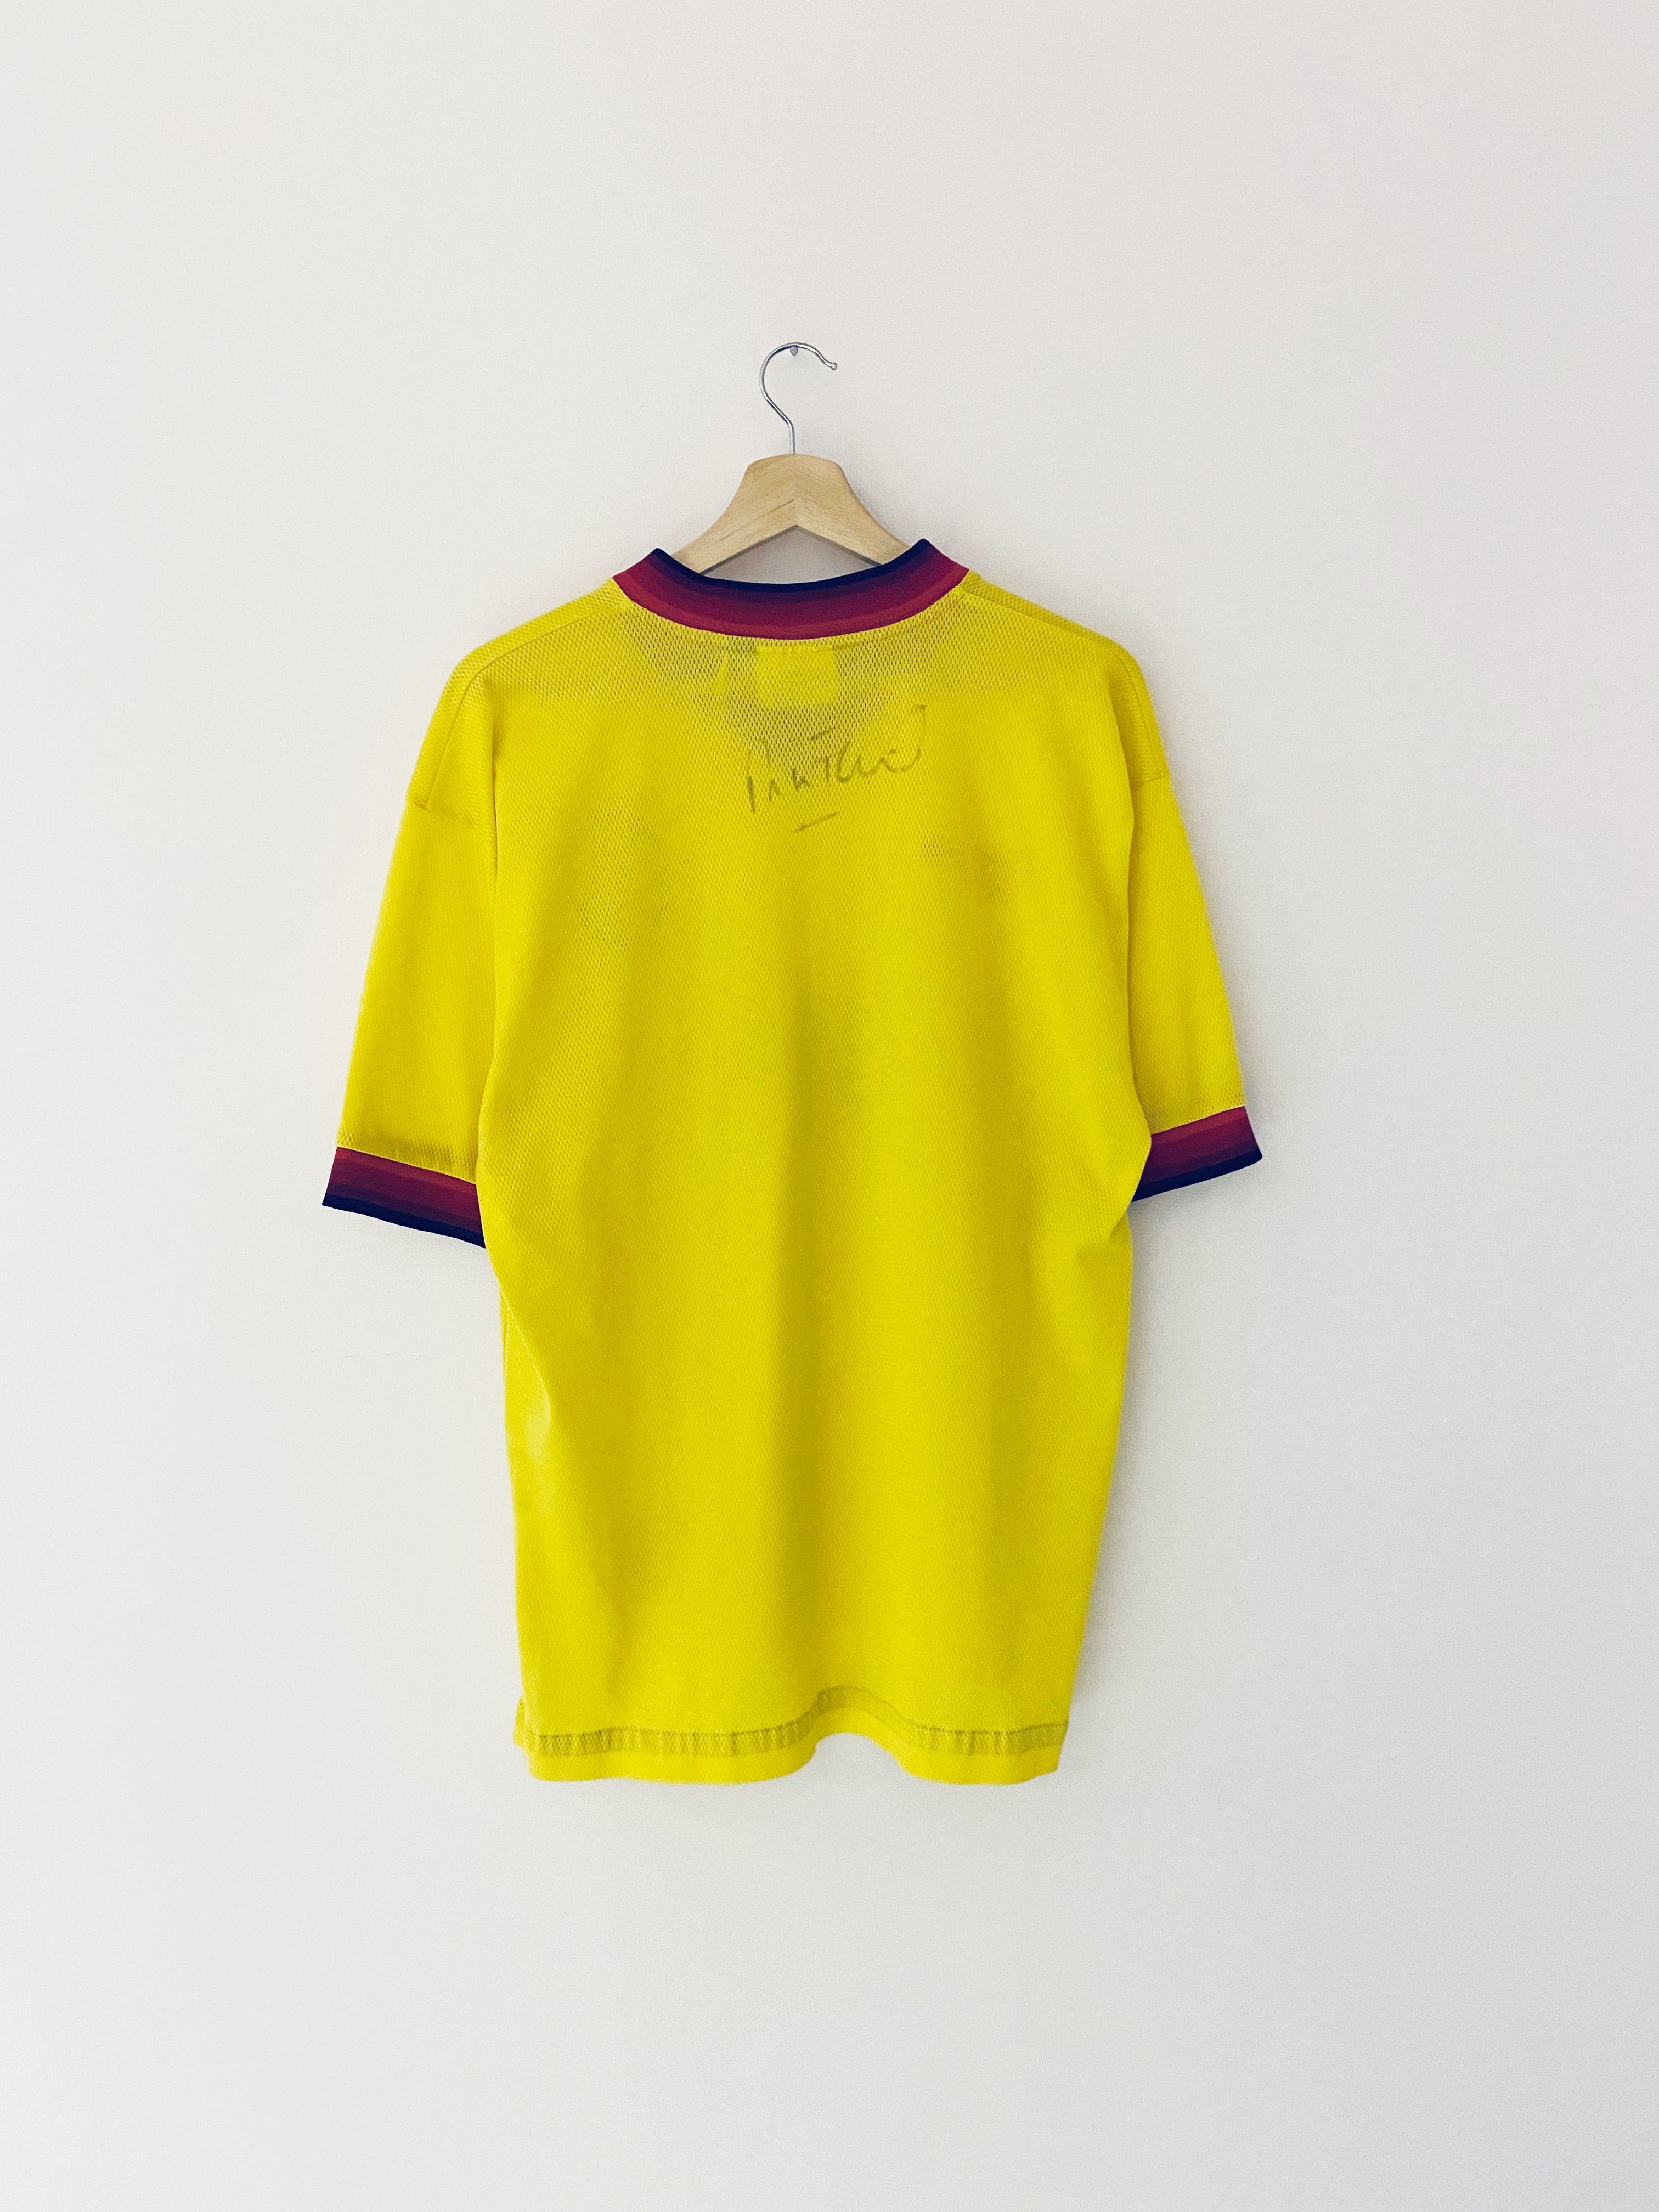 1997/99 Liverpool *Signed* Away Shirt (M) 9/10